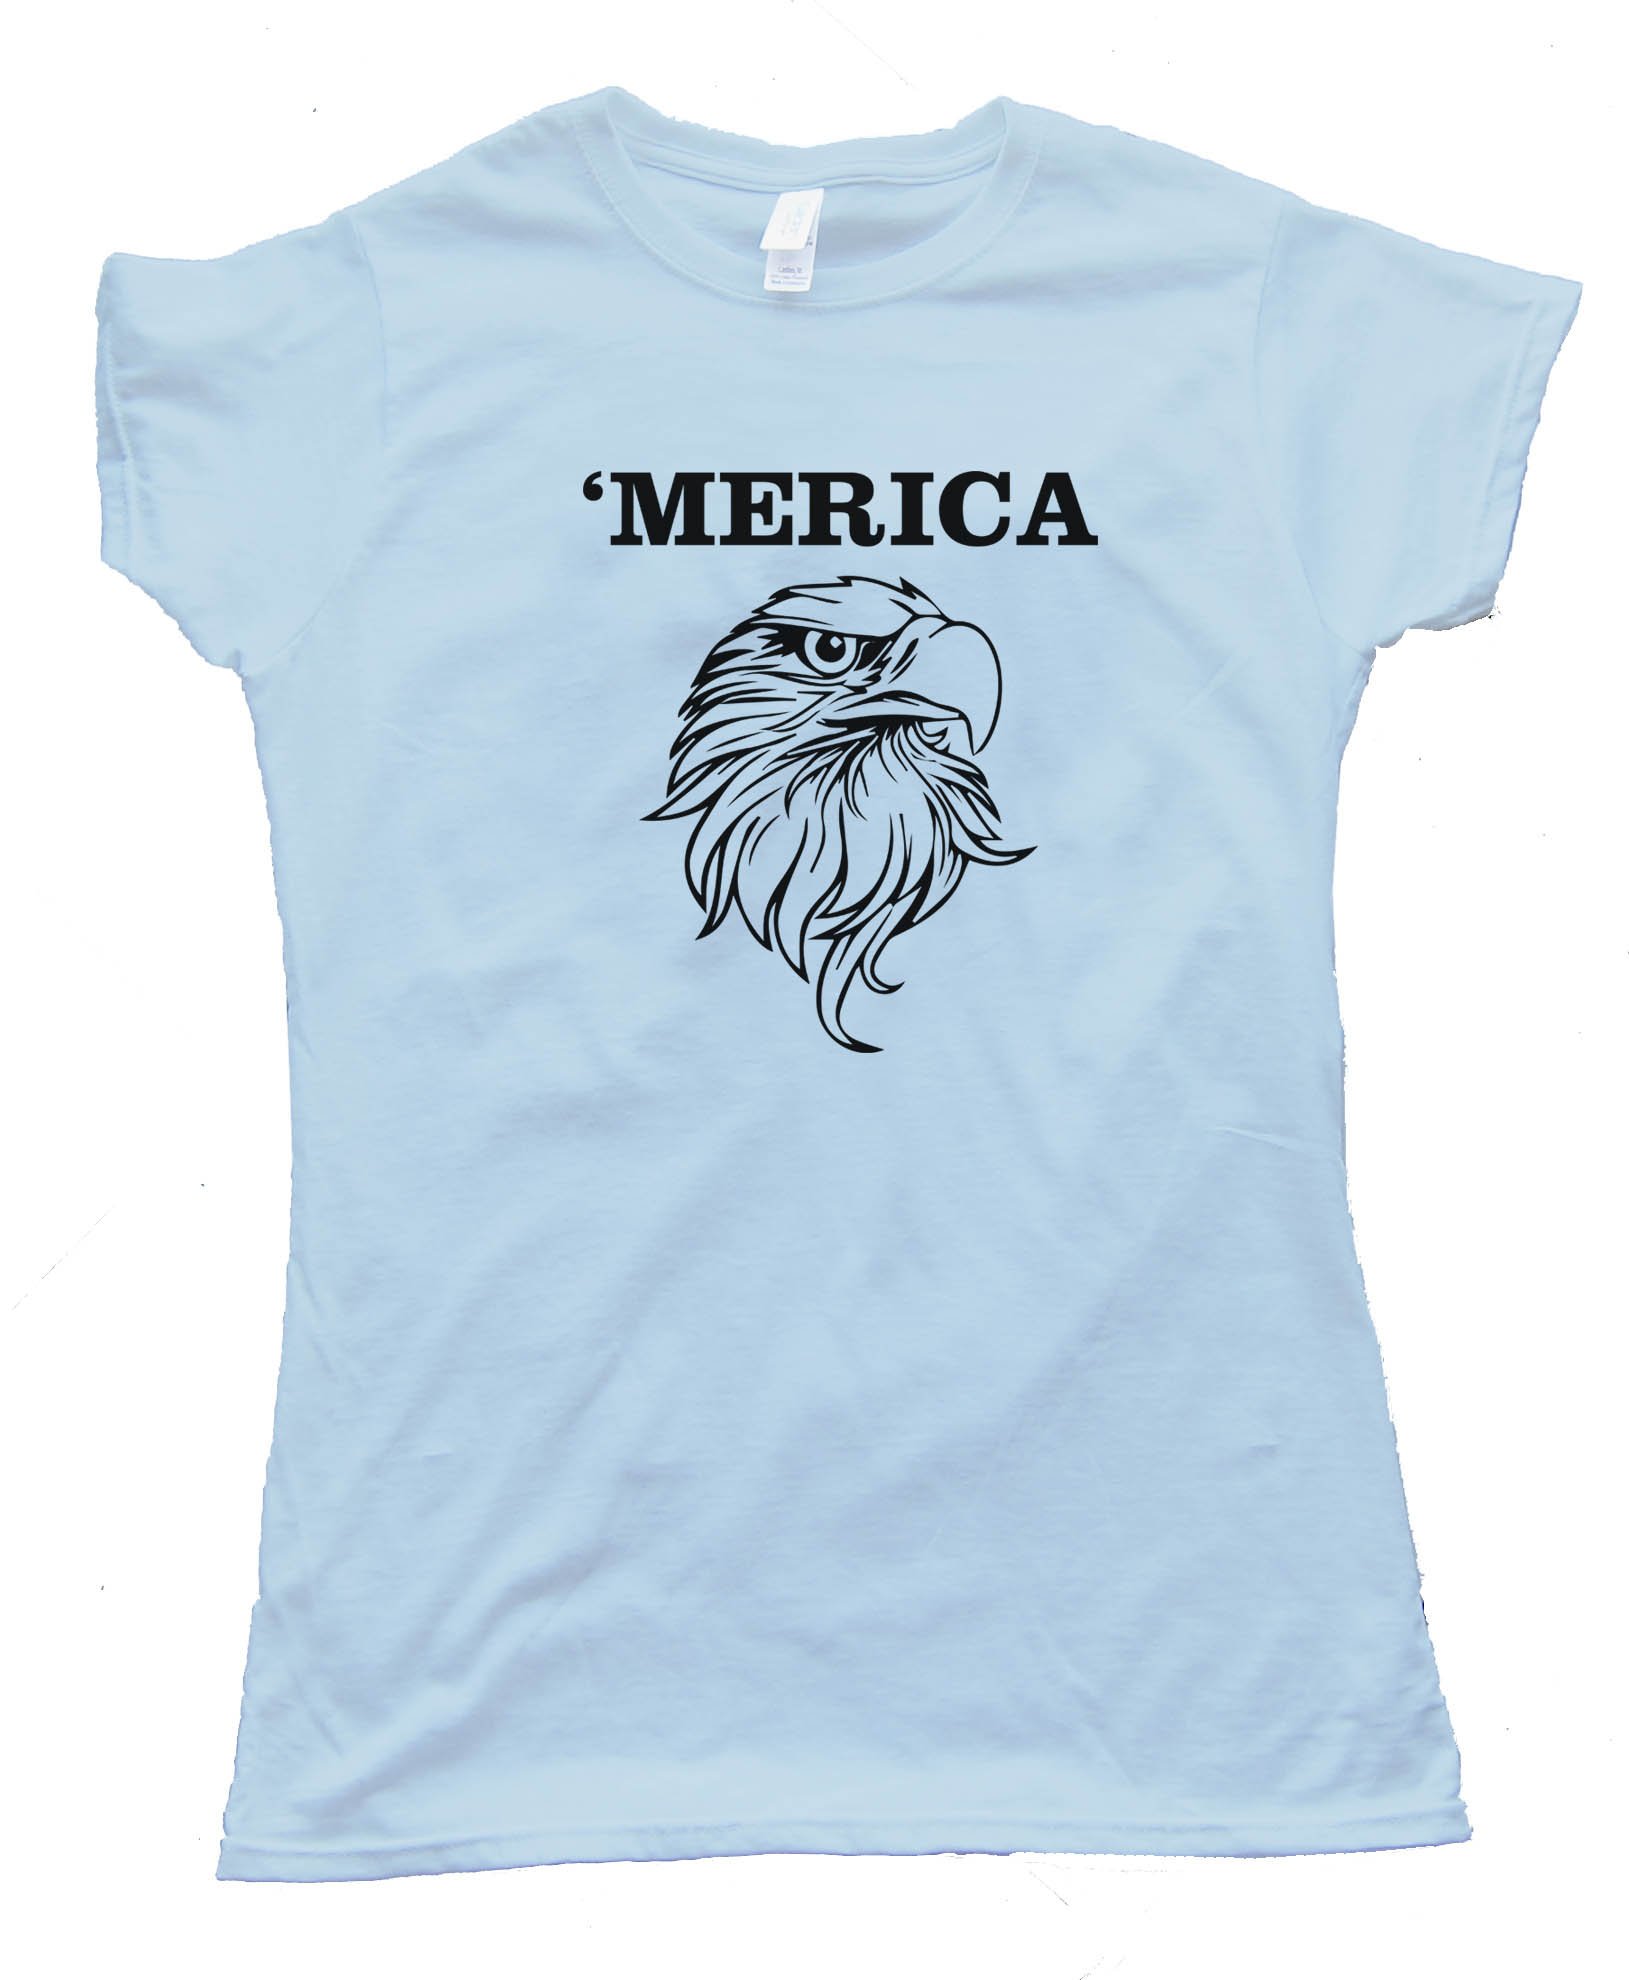 Womens 'Merica - American - Tee Shirt